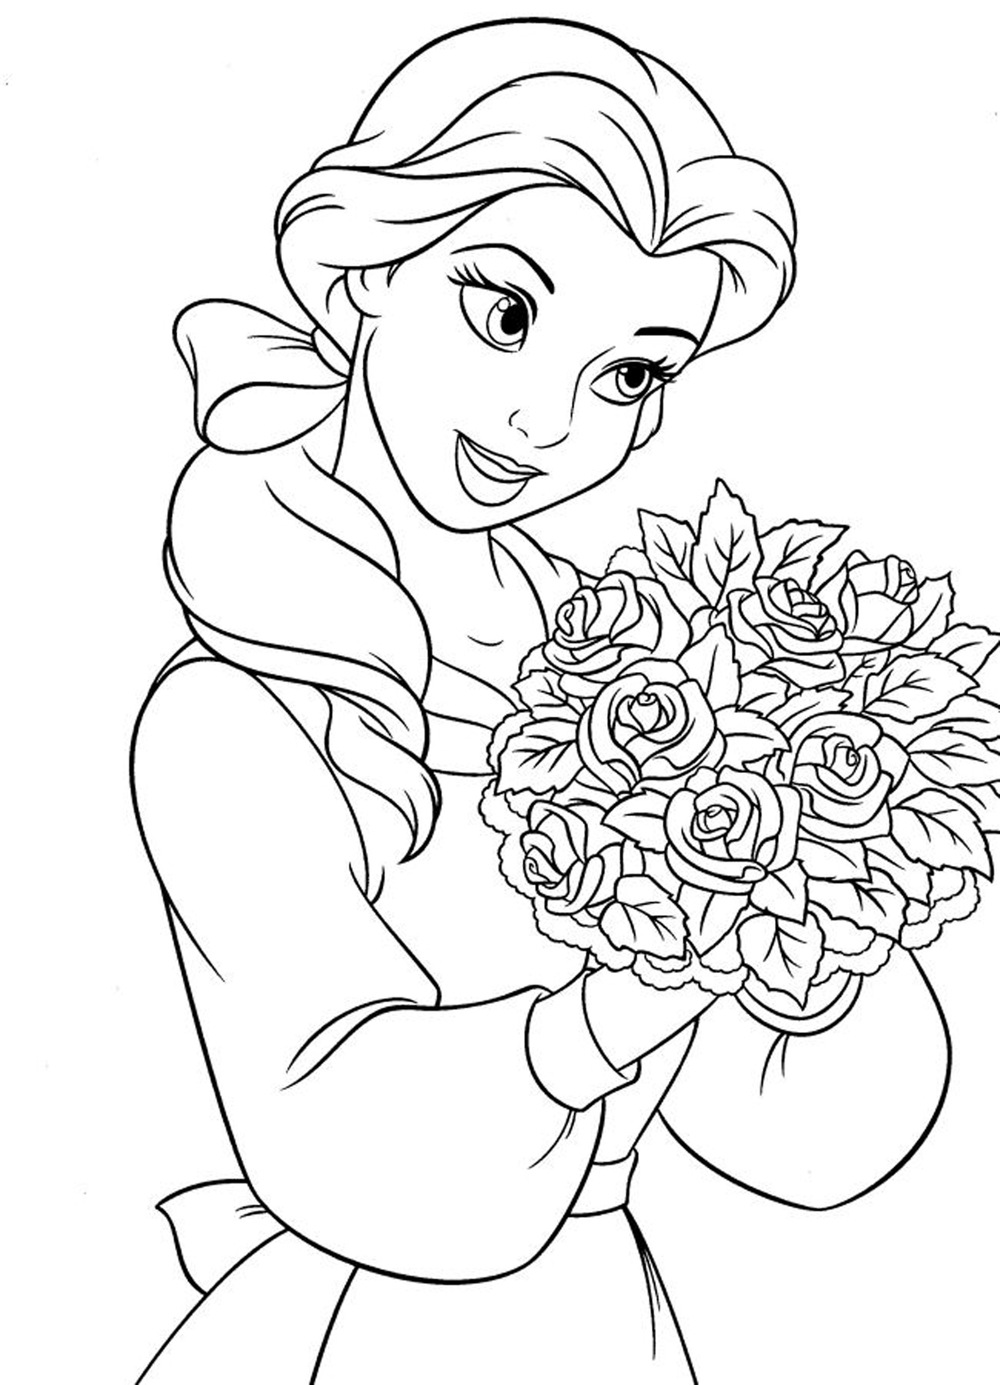 Disney Princess Tiana Coloring Page Disney Pinterest